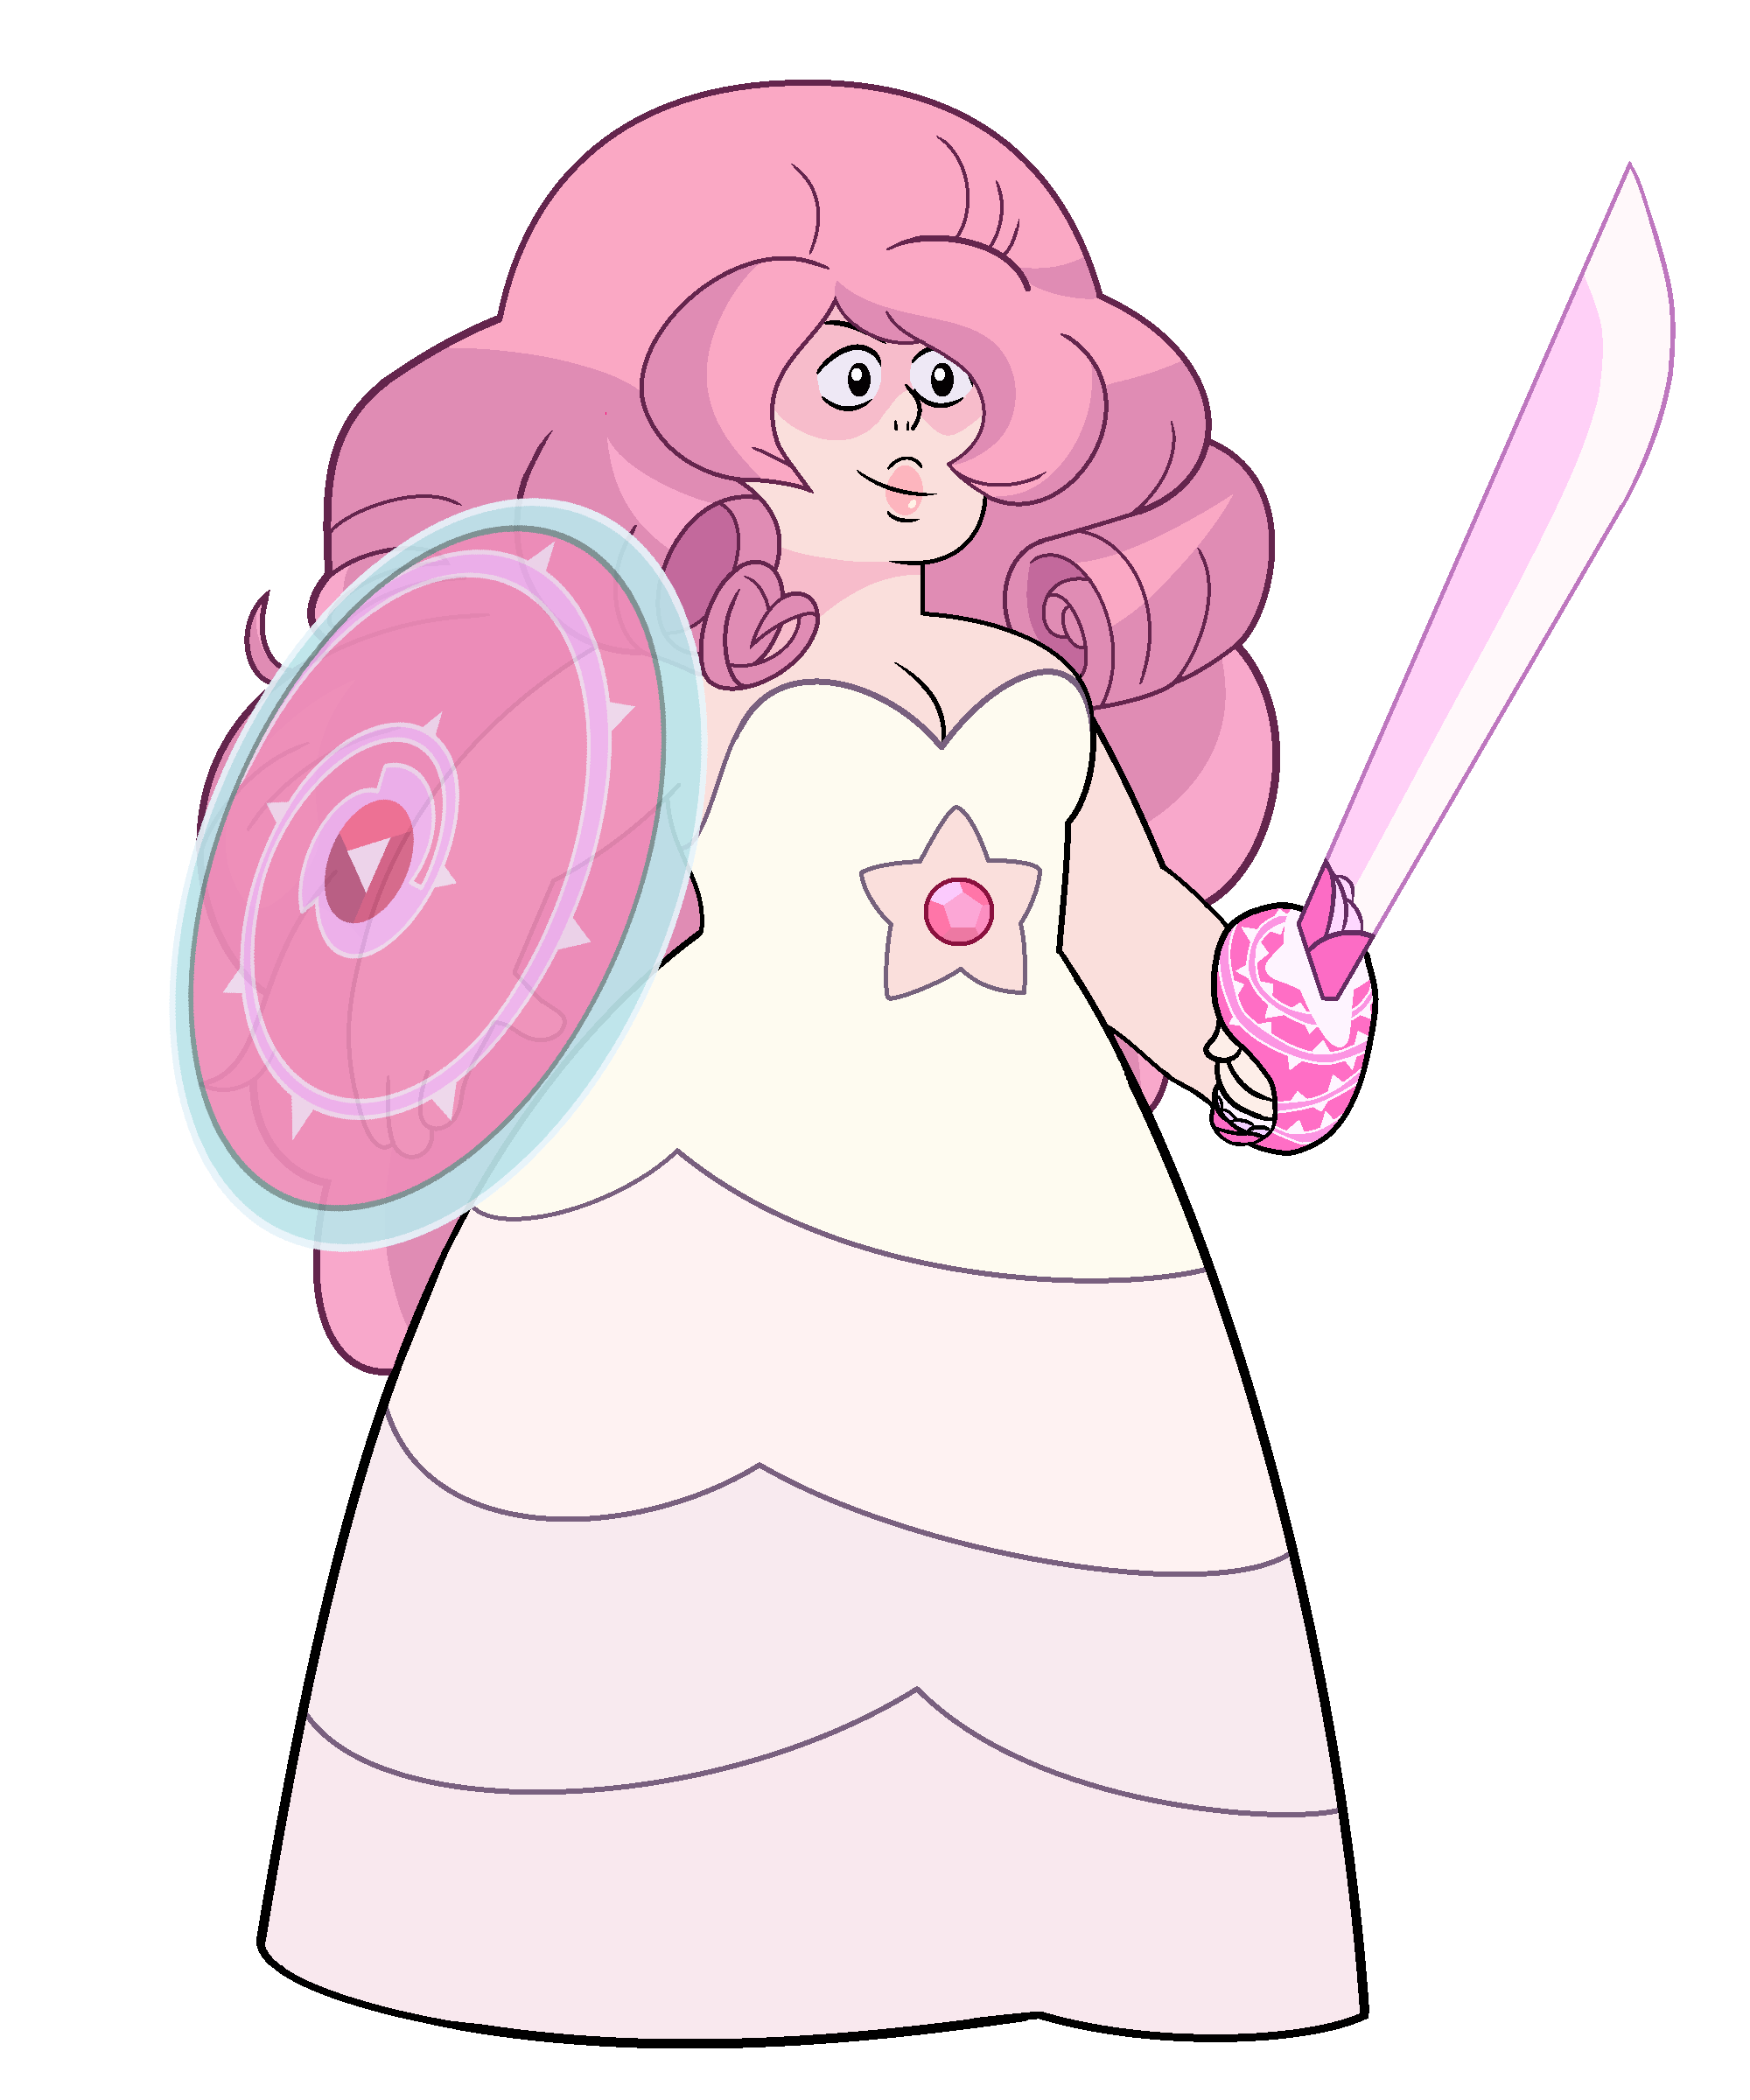 rose quartz steven universe genderbend